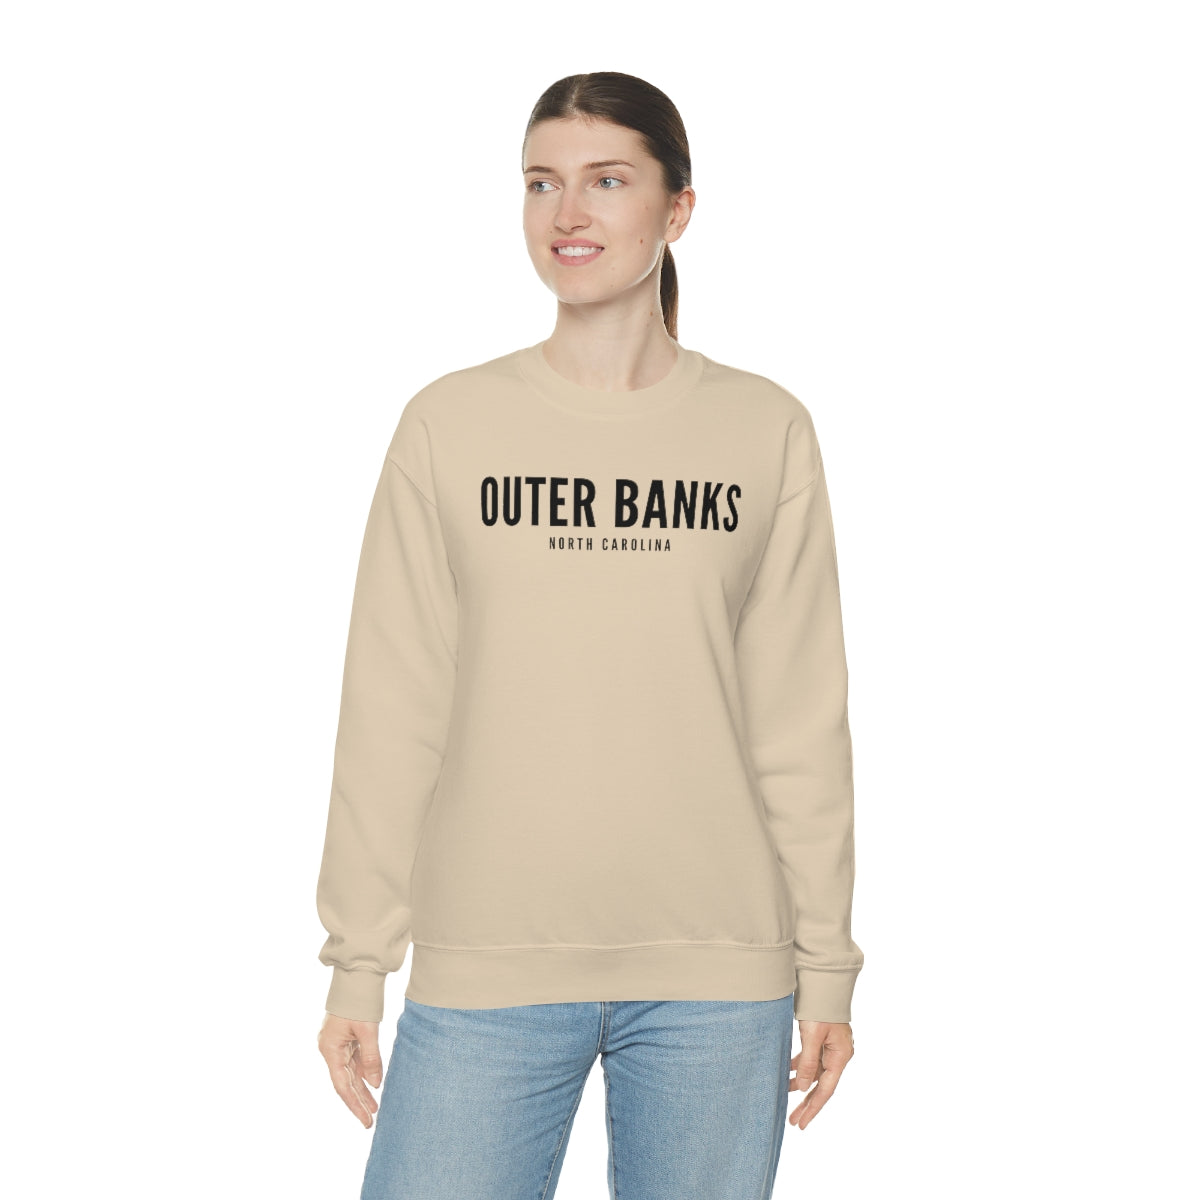 Outer Banks Unisex Crewneck Sweatshirt